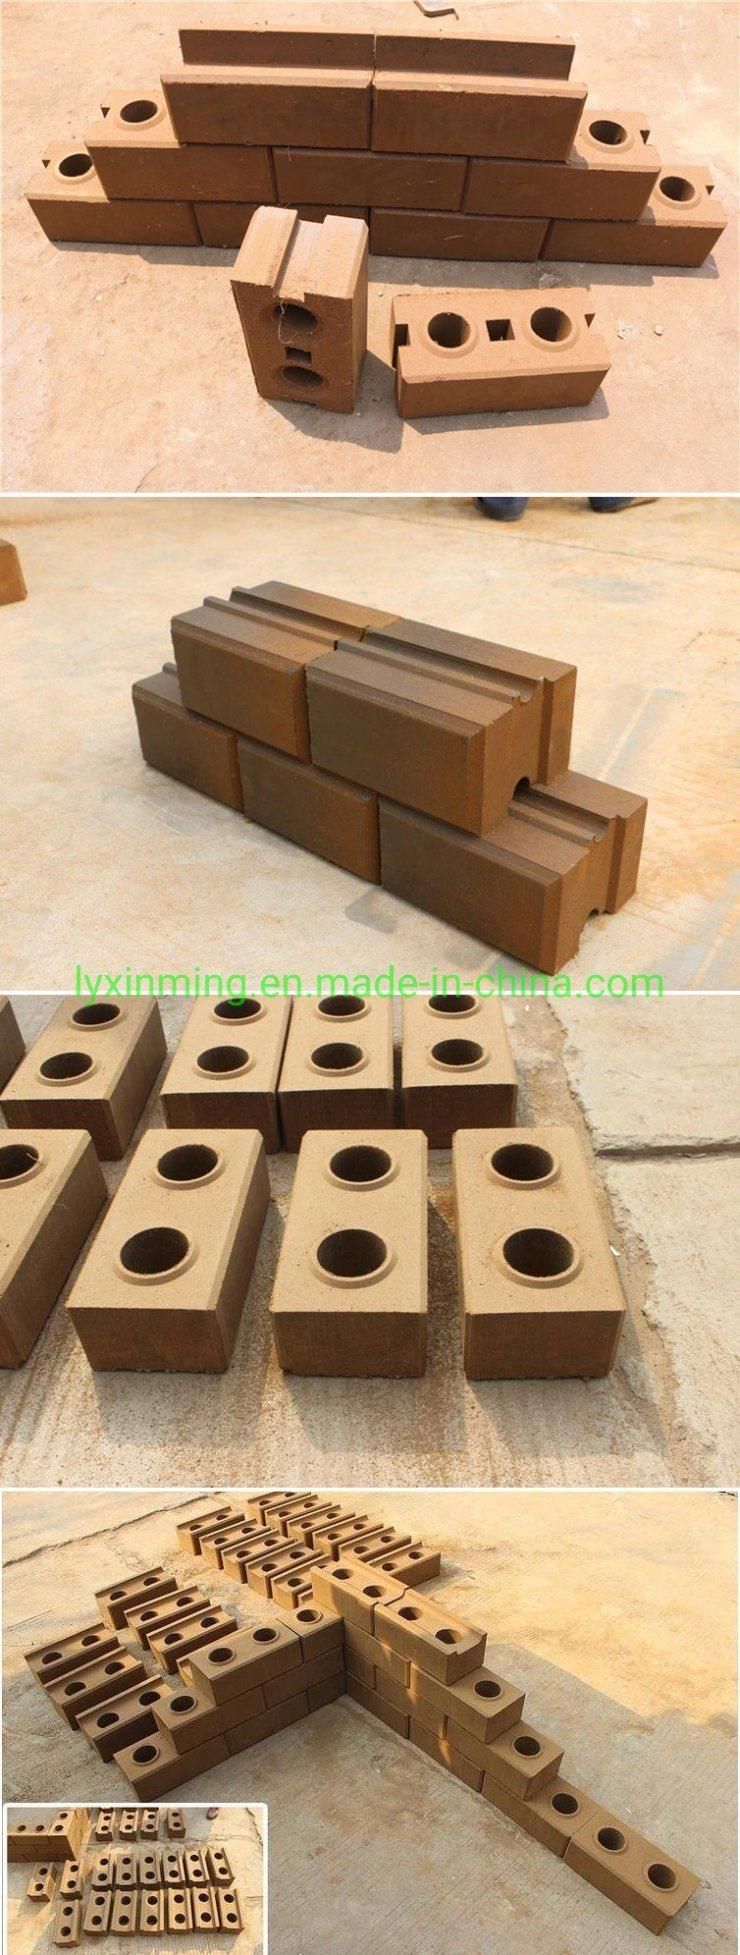 Wide Used Xm2-40 Block Making Machine Manual Soil Brick Machine with Factory Price